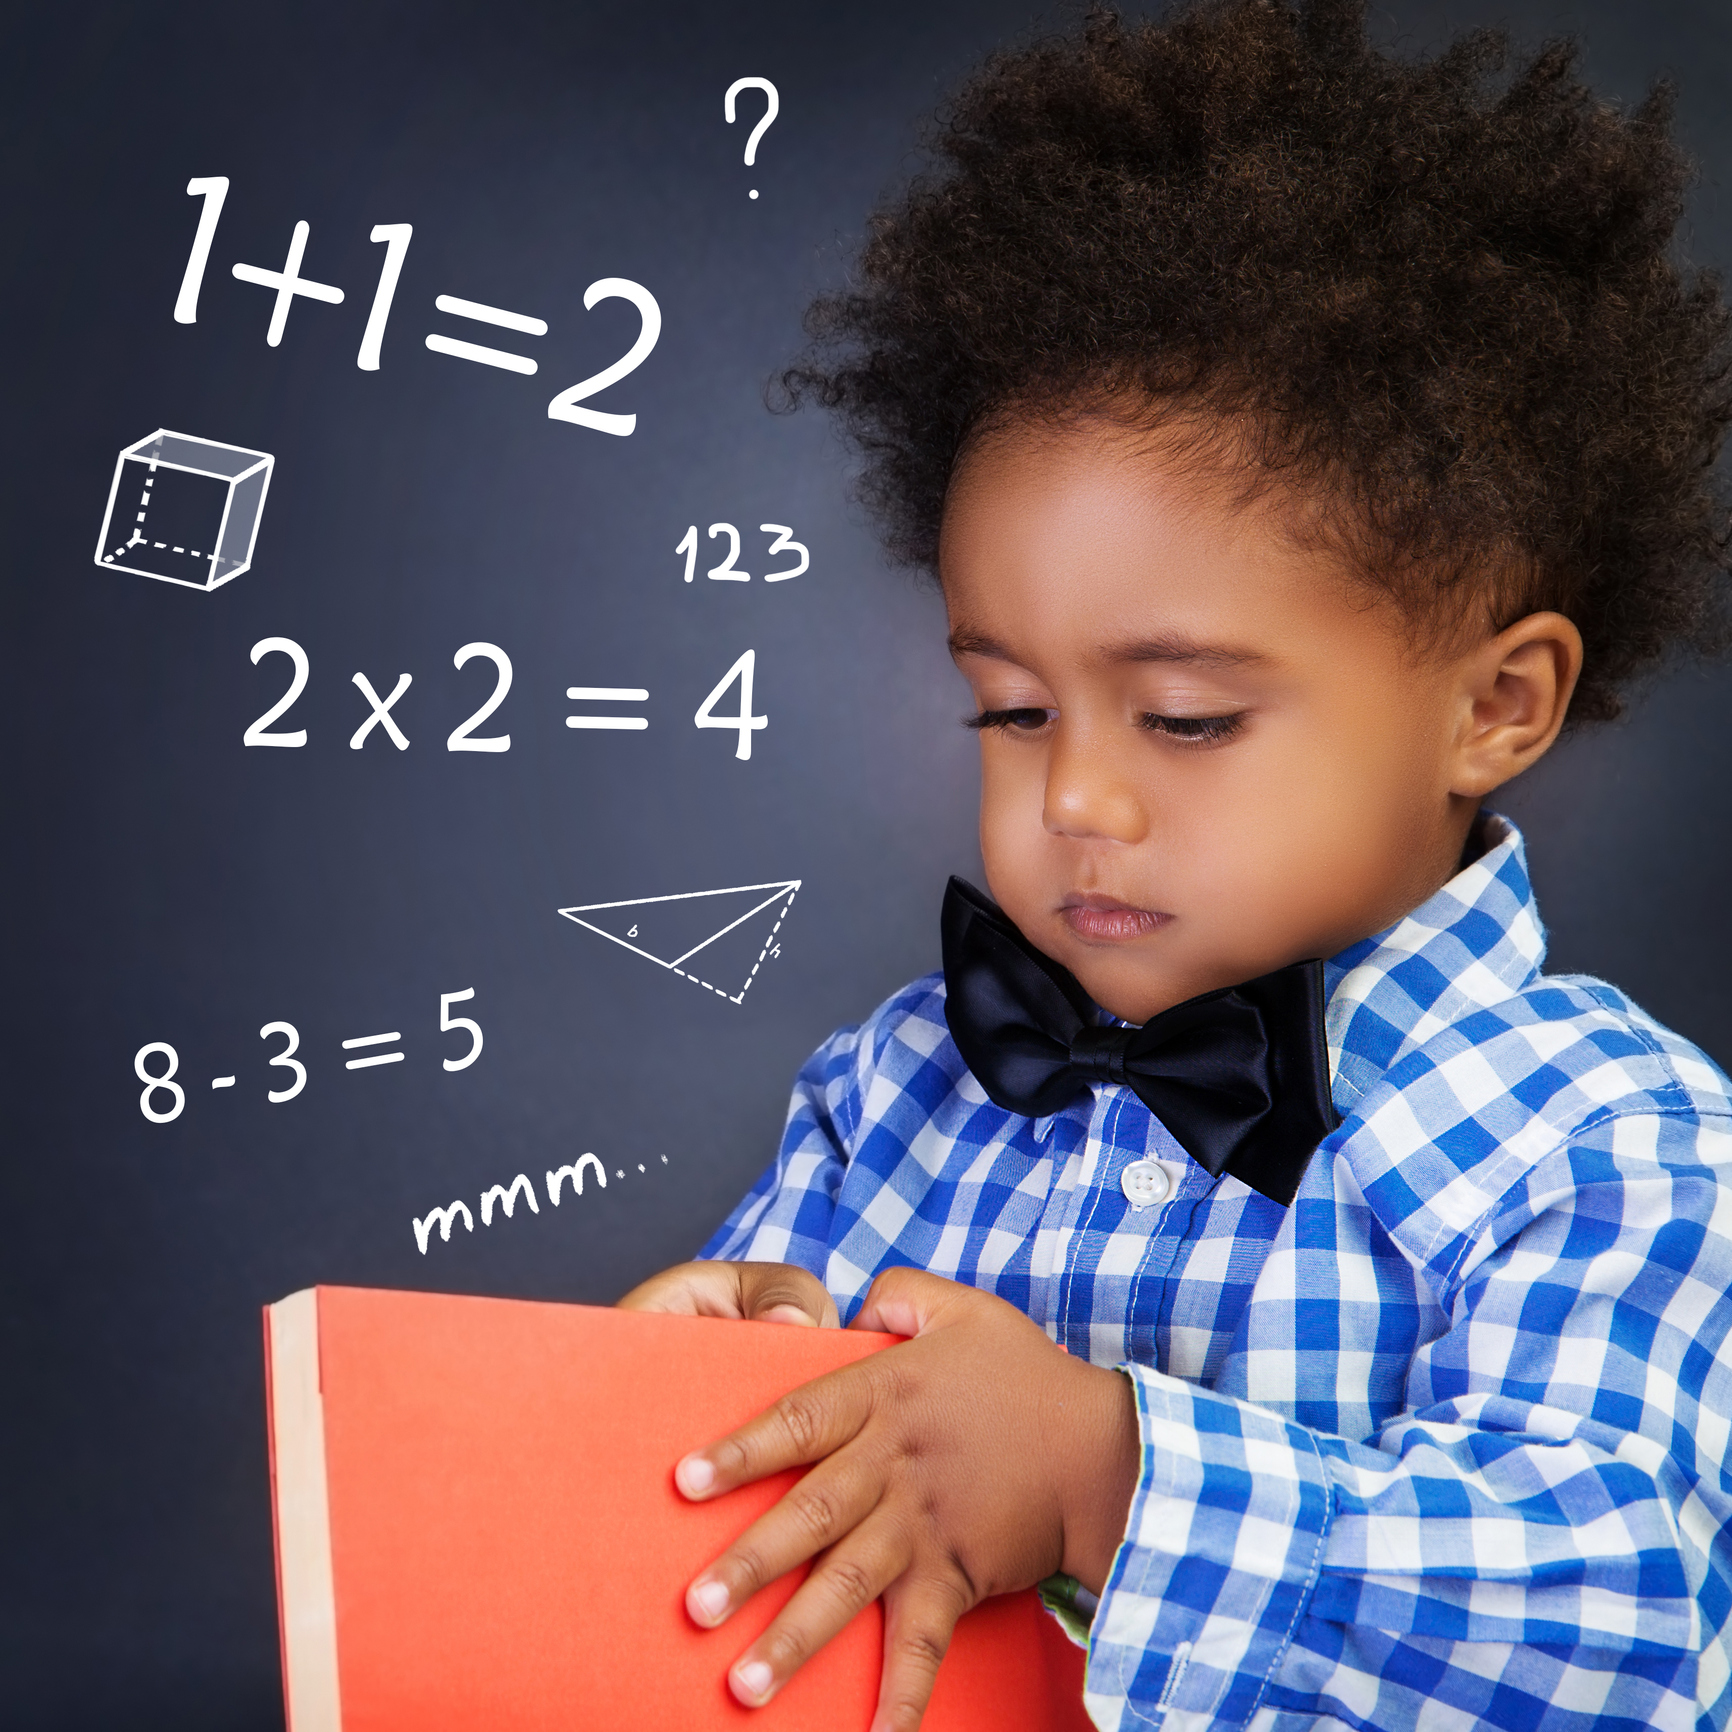 Little Known Secret to Improve Math Grades: Work on Reading Skills